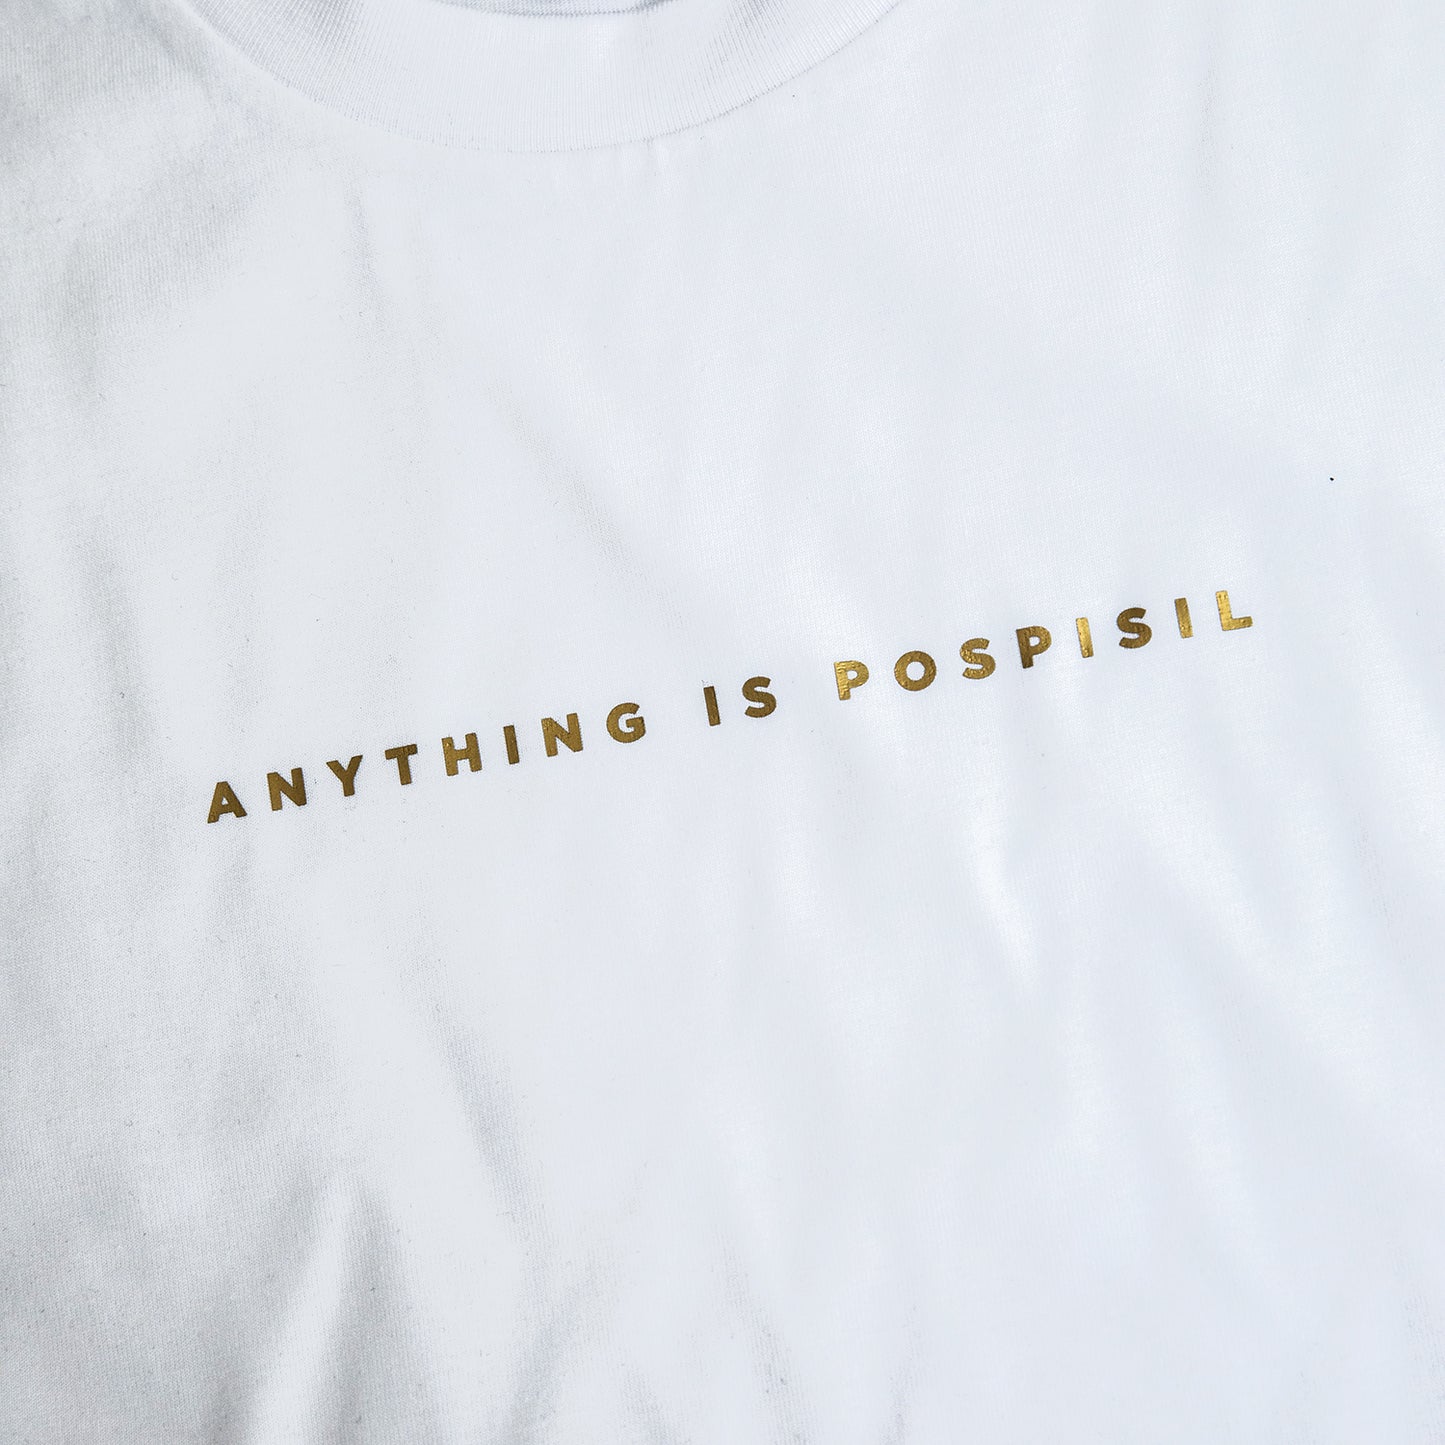 Women's "Anything is Pospisil" Shirt - White